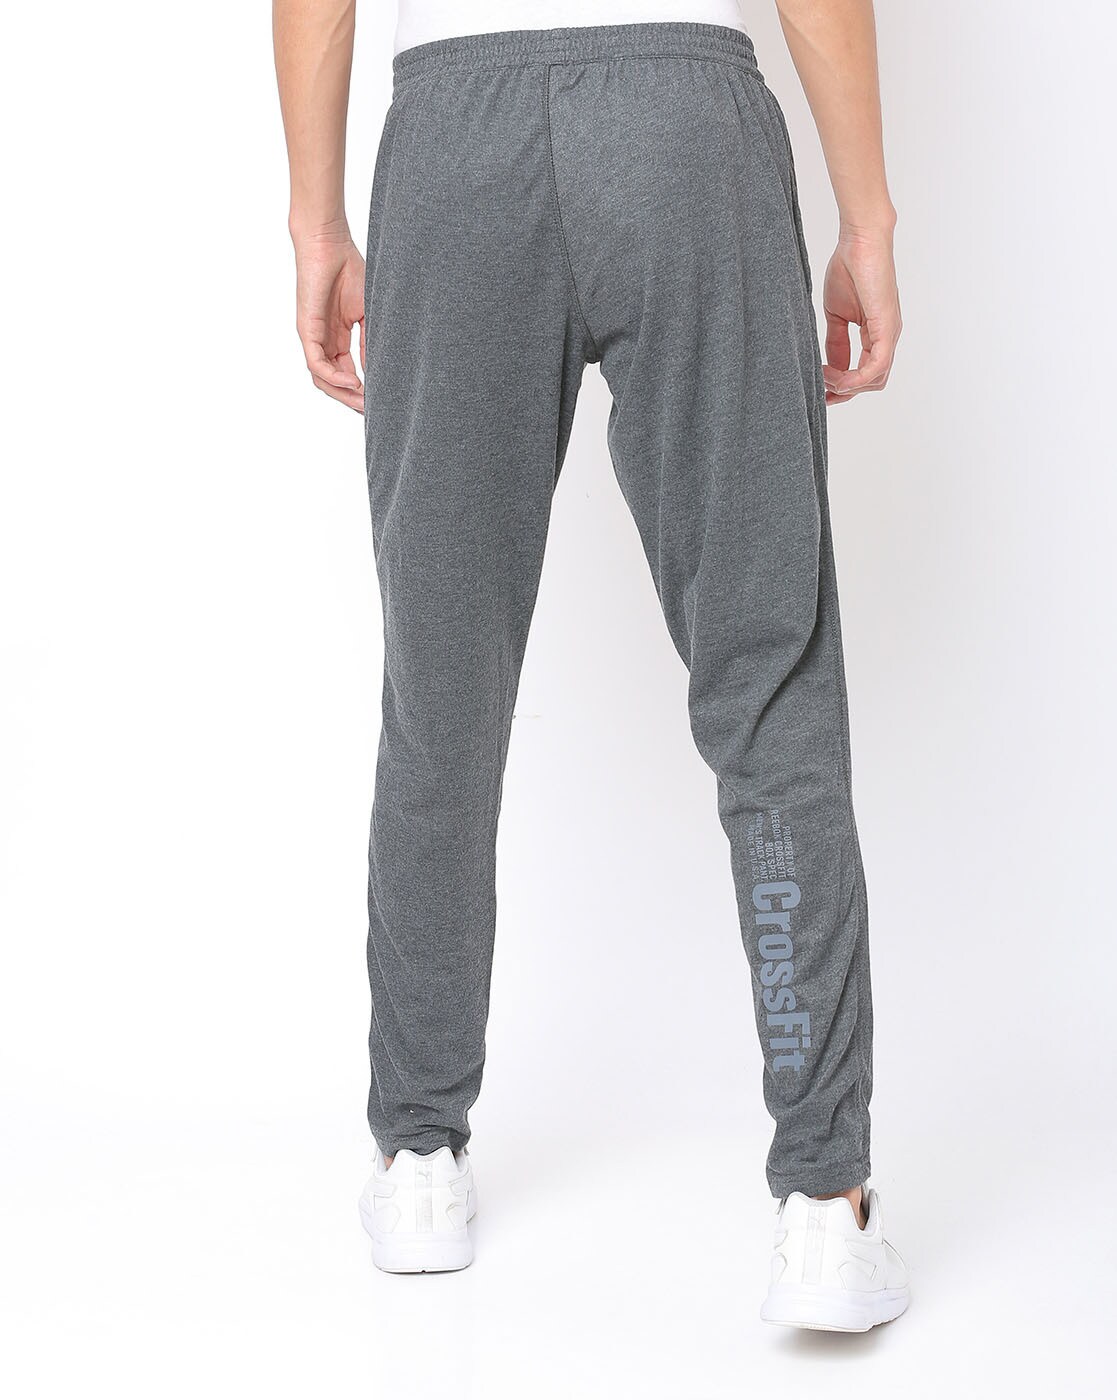 Reebok CrossFit Men Activewear Trousers Pants for Men | eBay